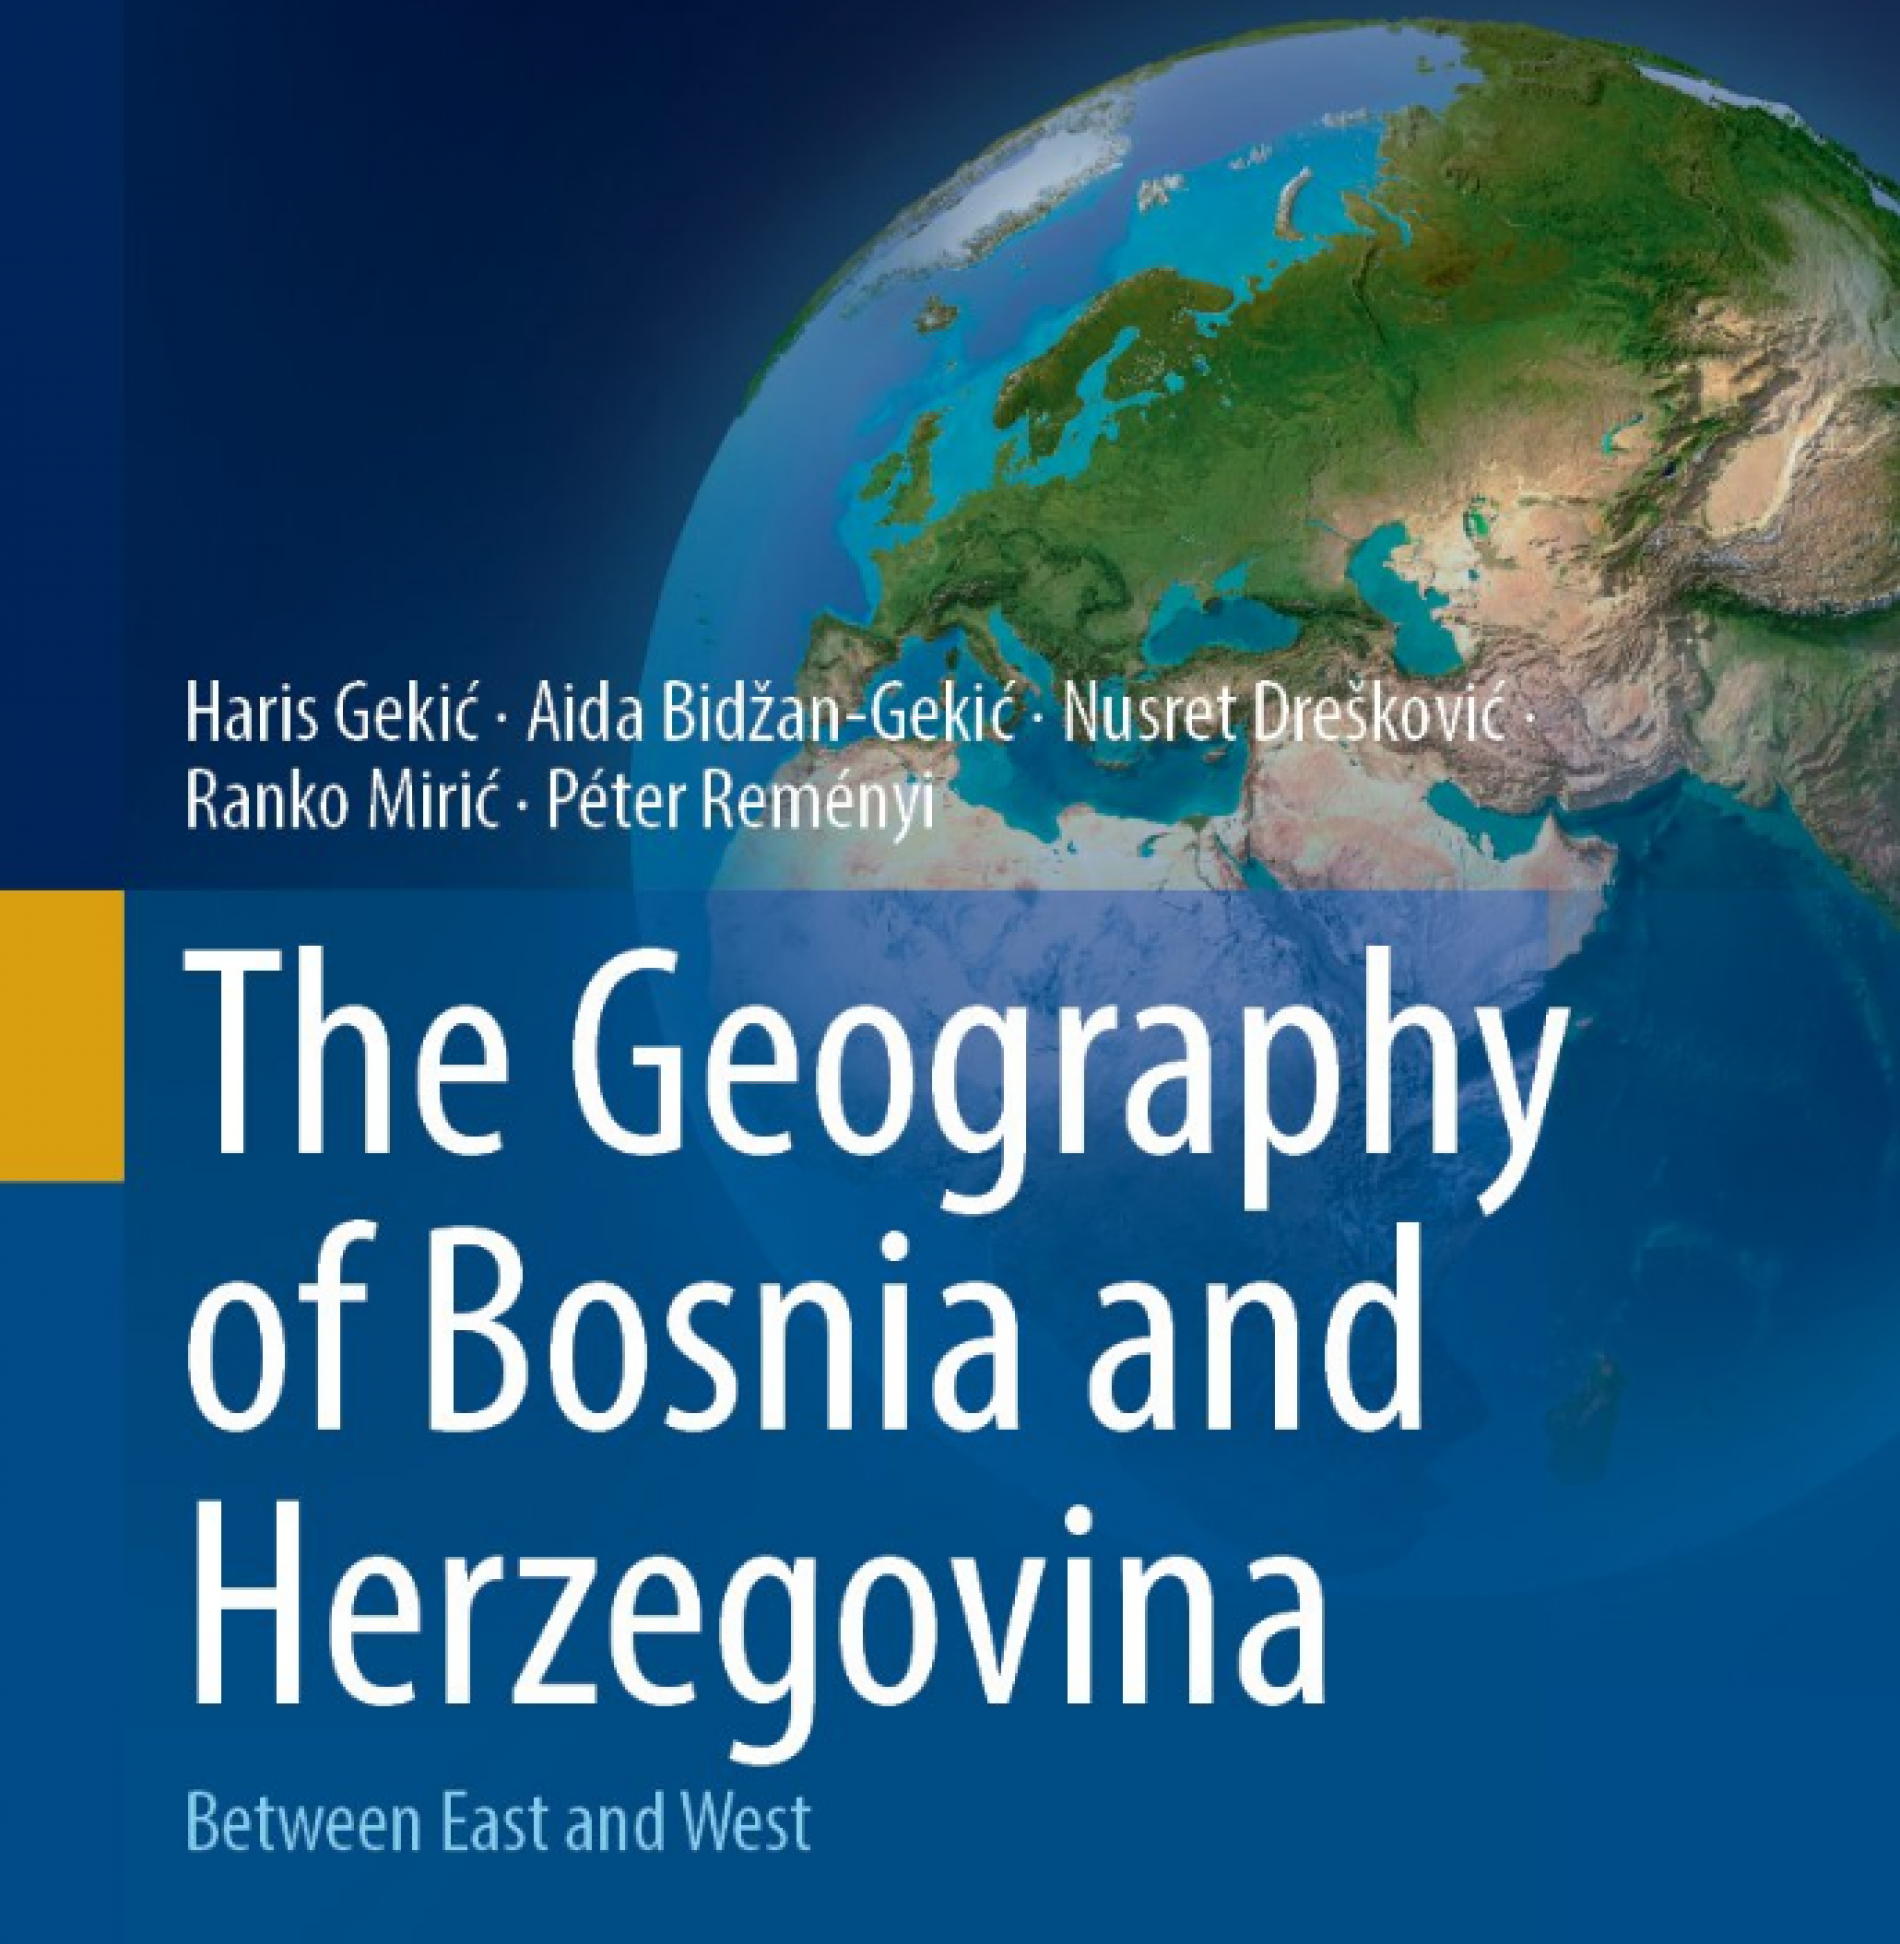 Značajan uspjeh bosanskih geografa: Objavljena naučna monografija “Geografija Bosne i Hercegovine”